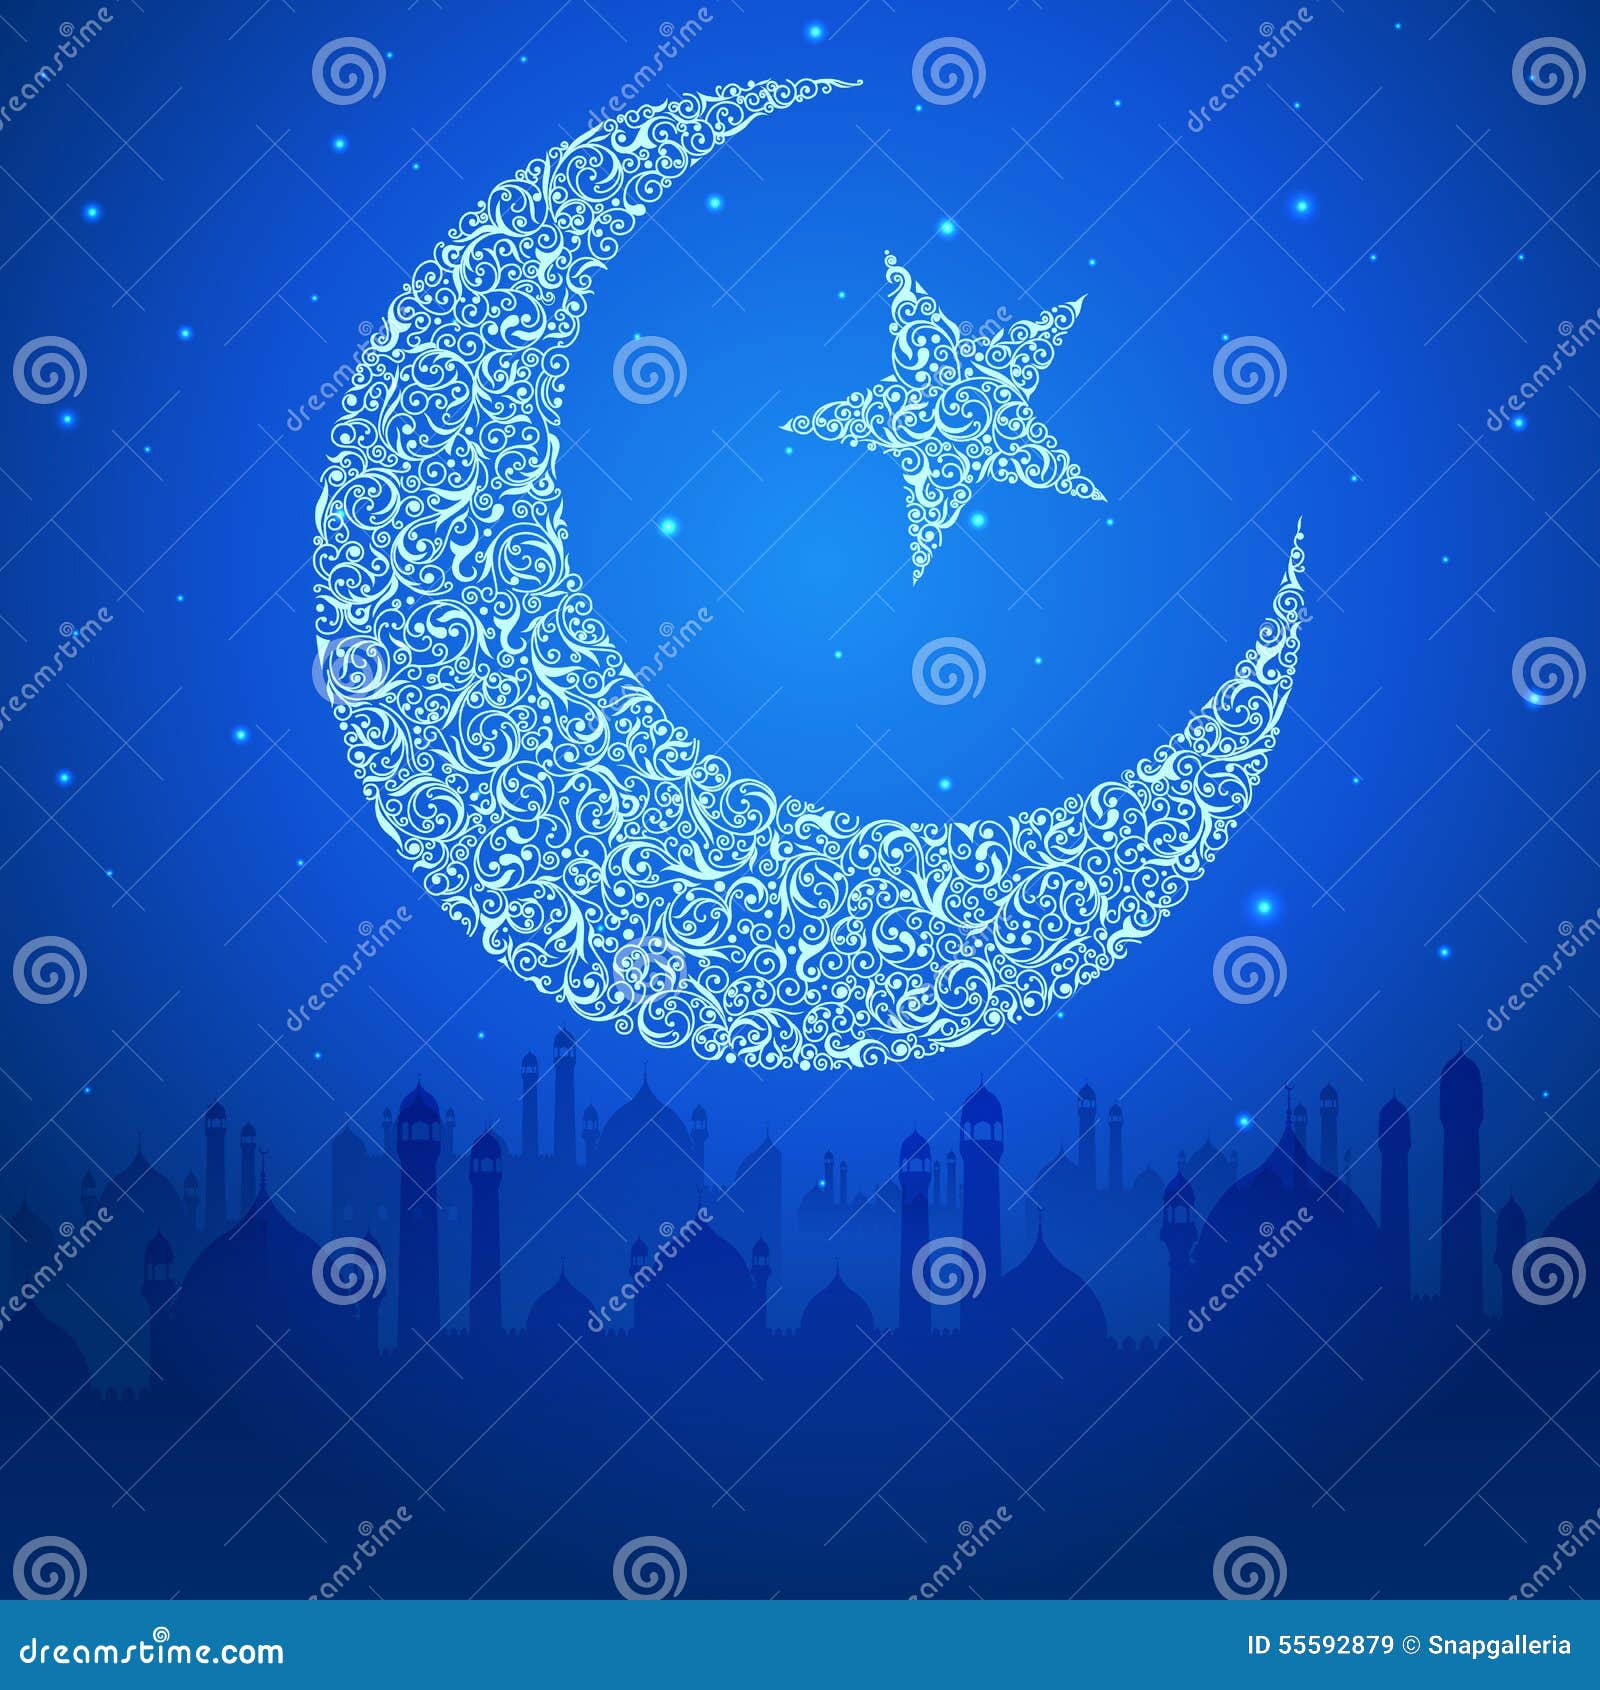 eid mubarak (happy eid) background